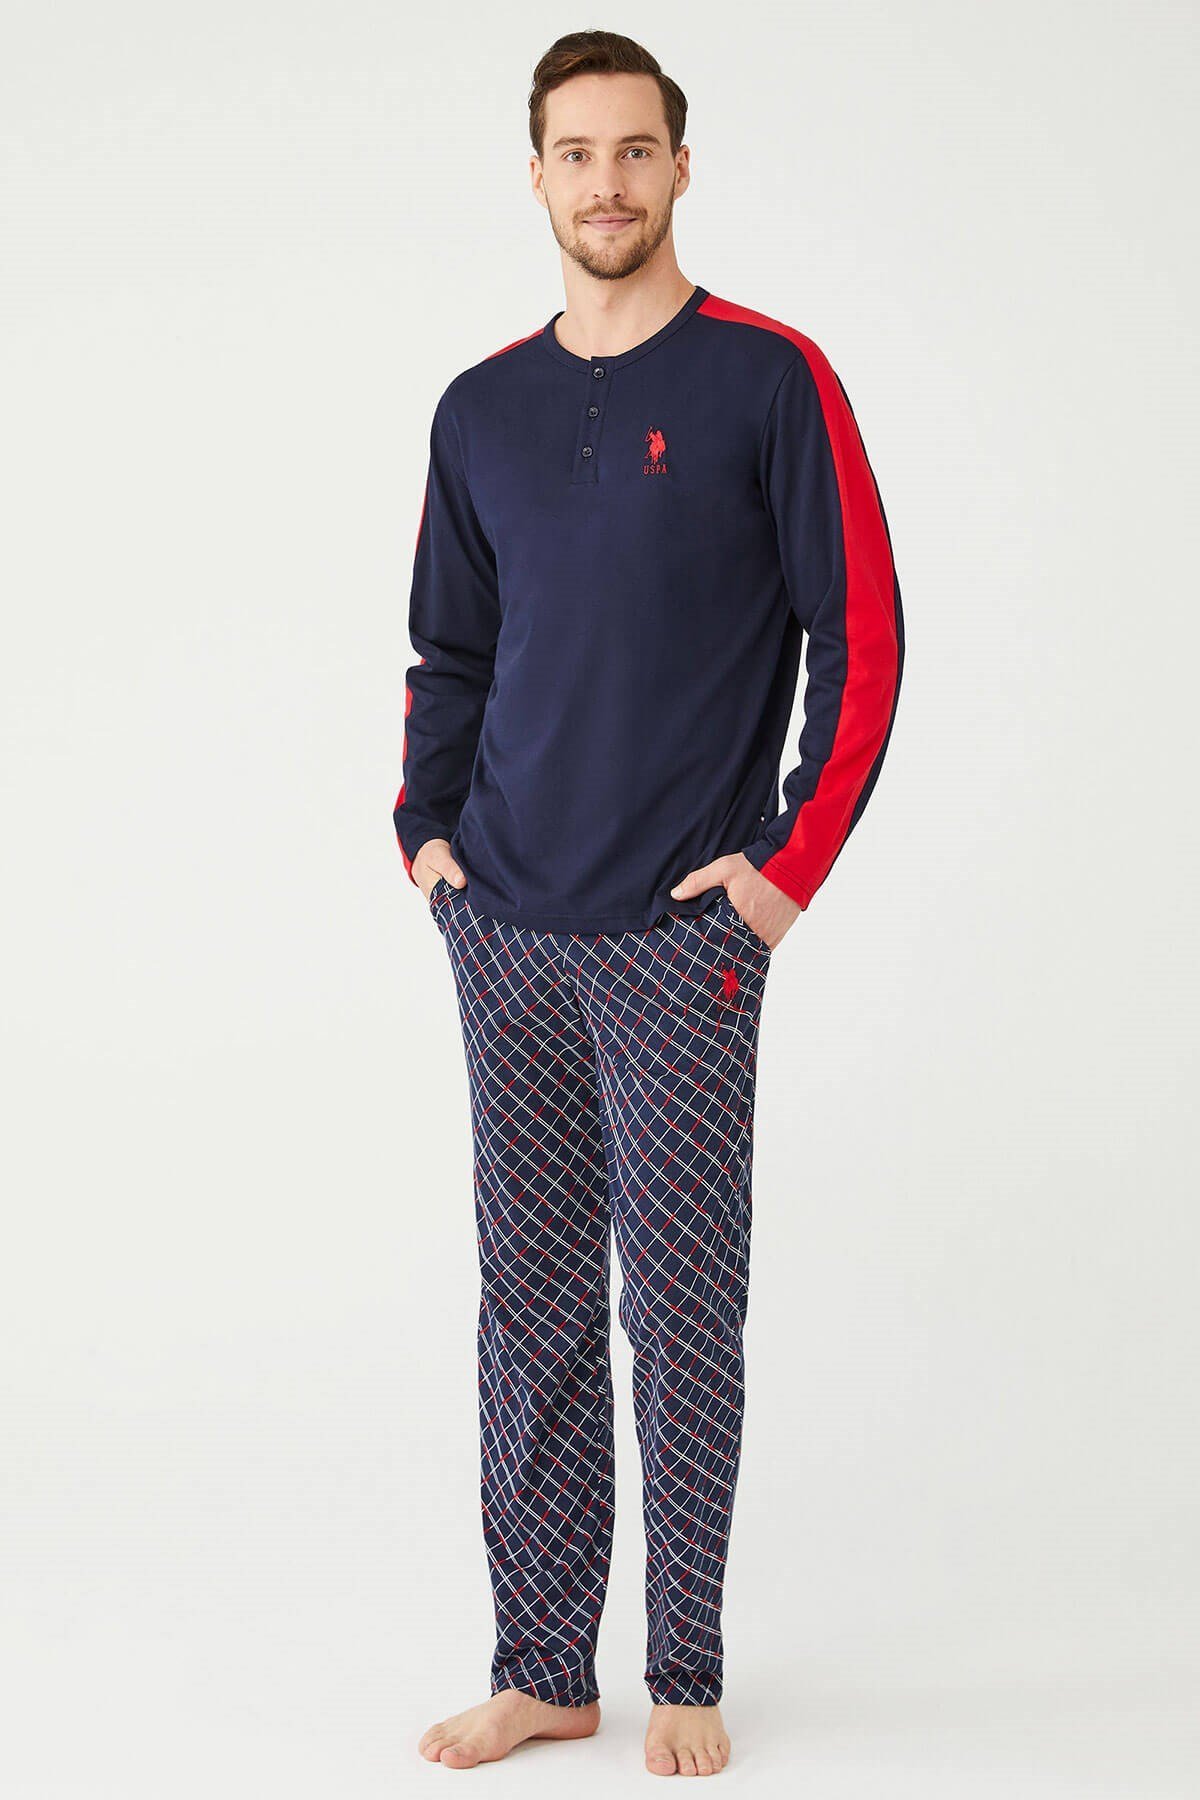 U.S. Polo Assn. Erkek Lacivert Patlı Pijama Takımı | Modcollection.com.tr